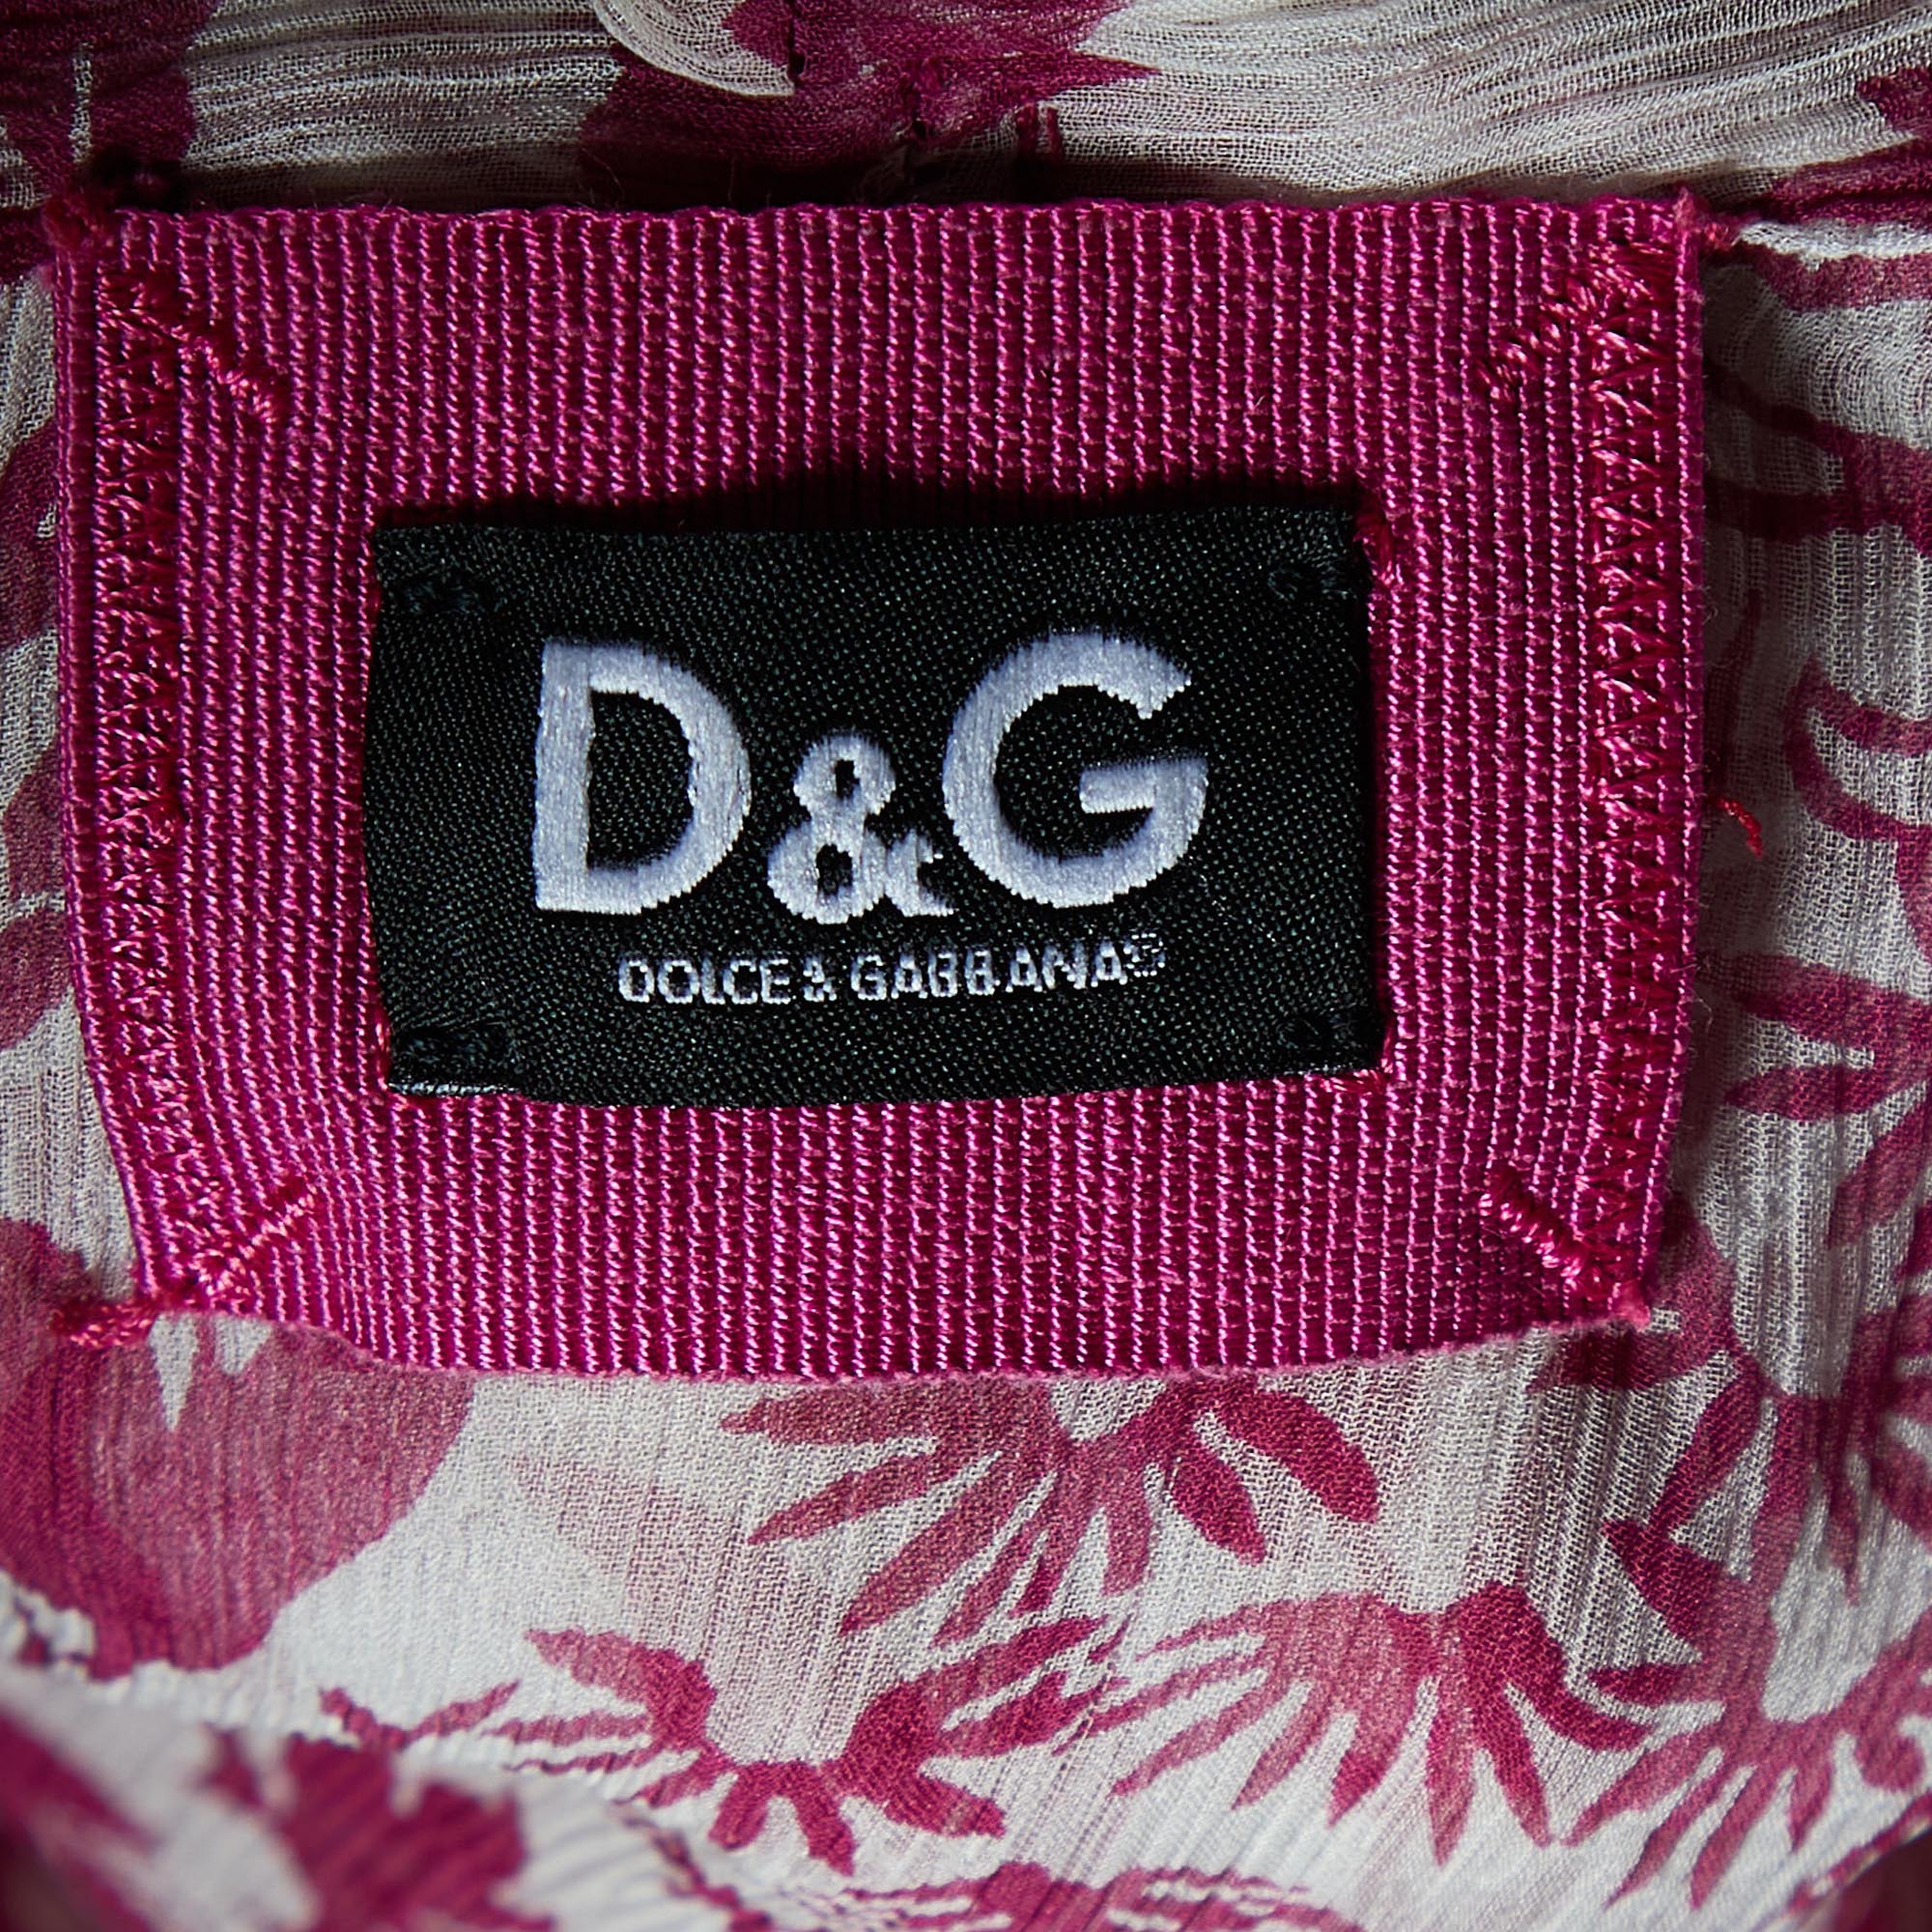 D&G Pink Floral Printed Silk Neck Tie Detail Top S